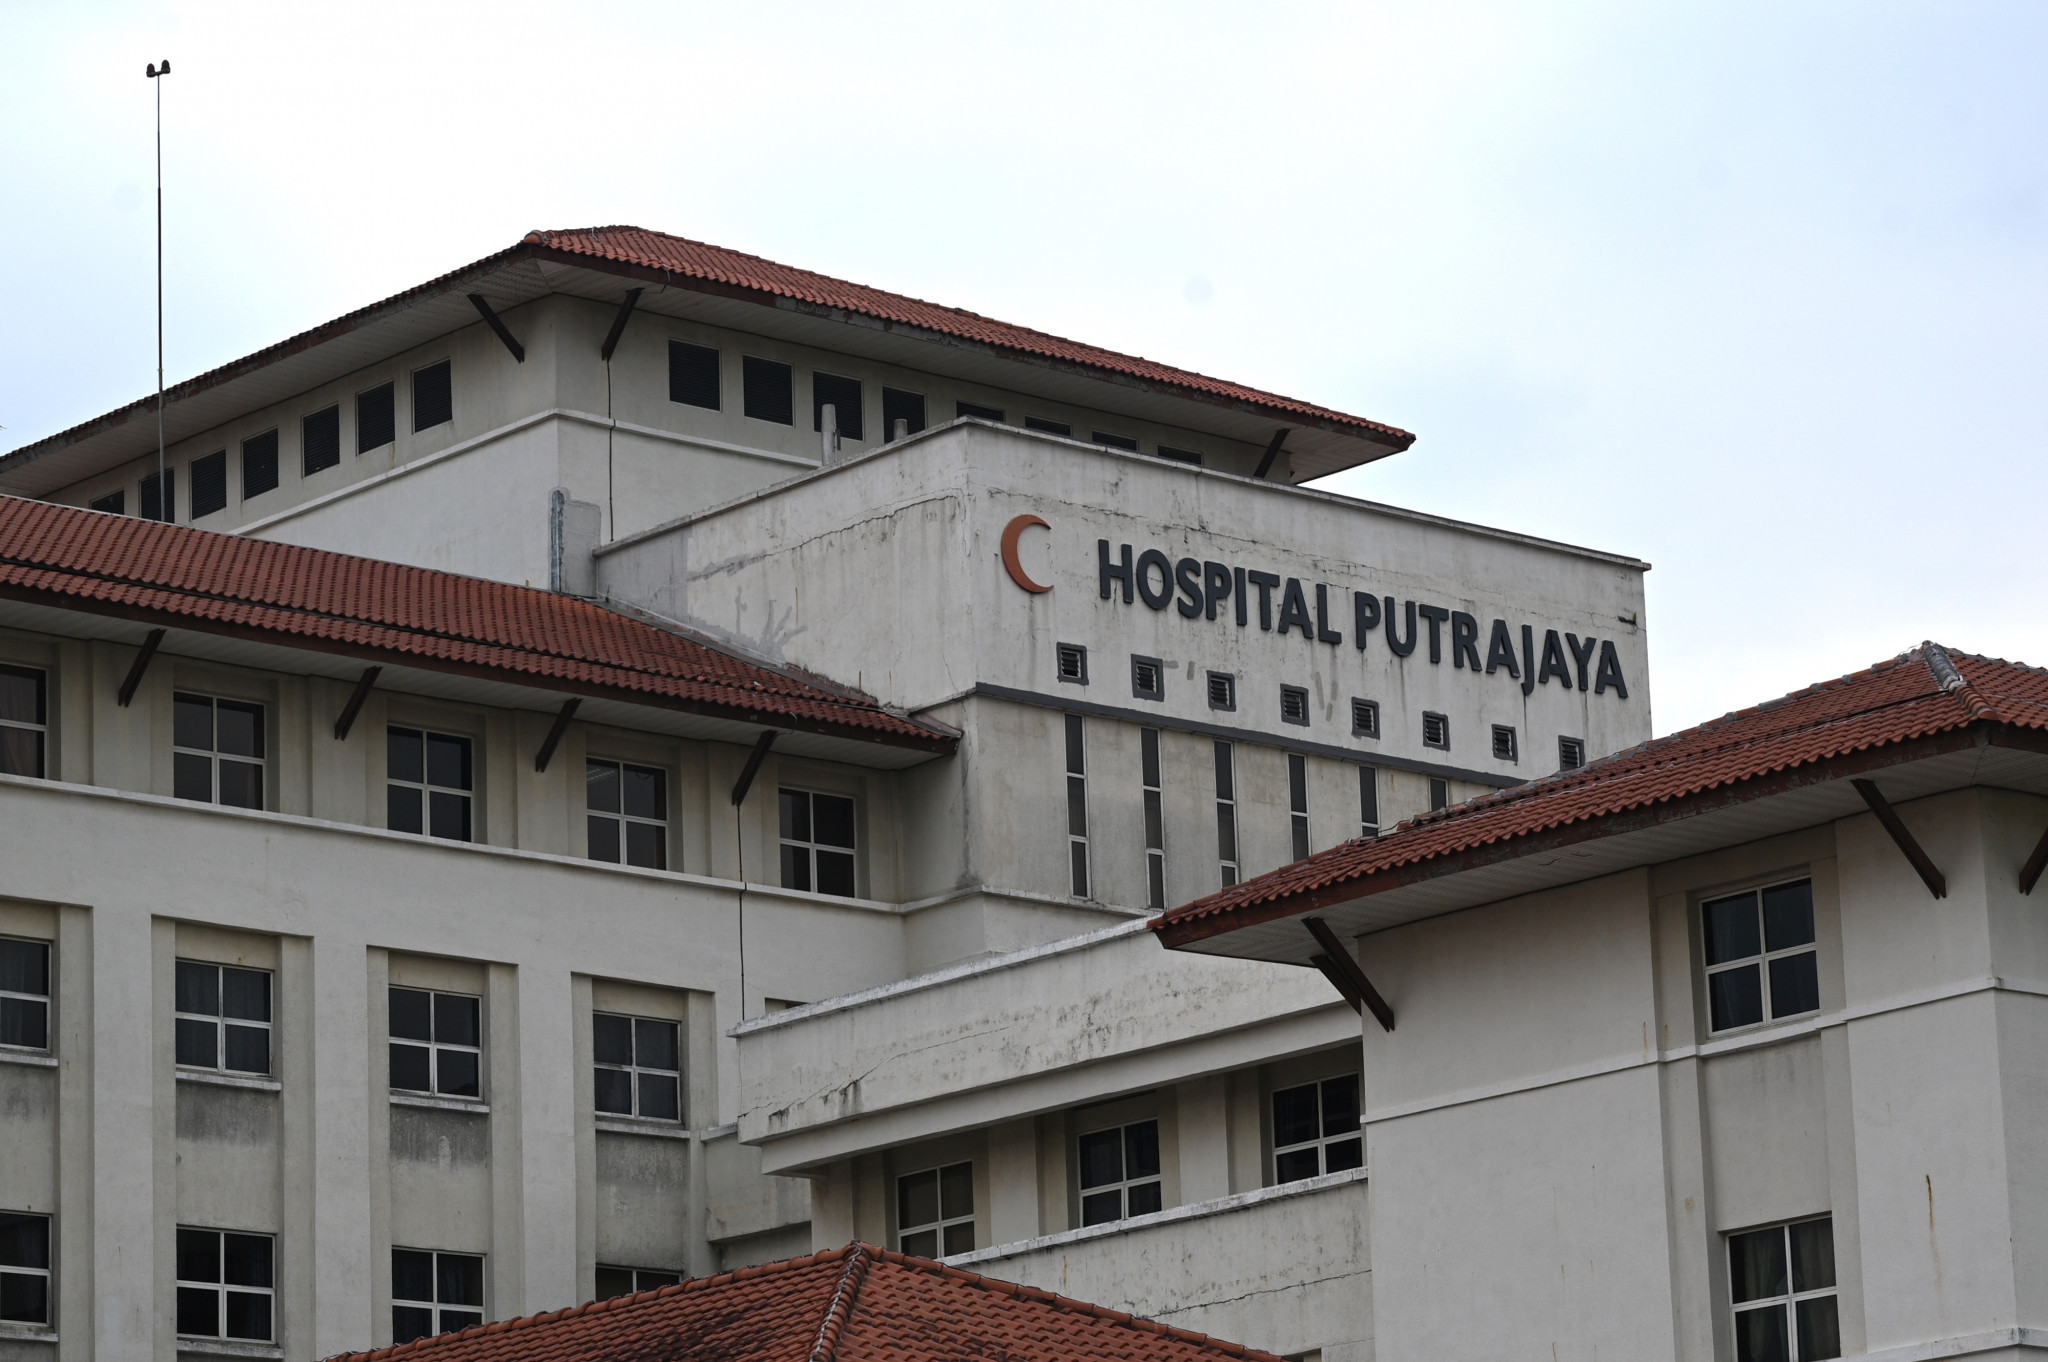 Kento Momota has been taken to Putrajaya Hospital for treatment ©Getty Images